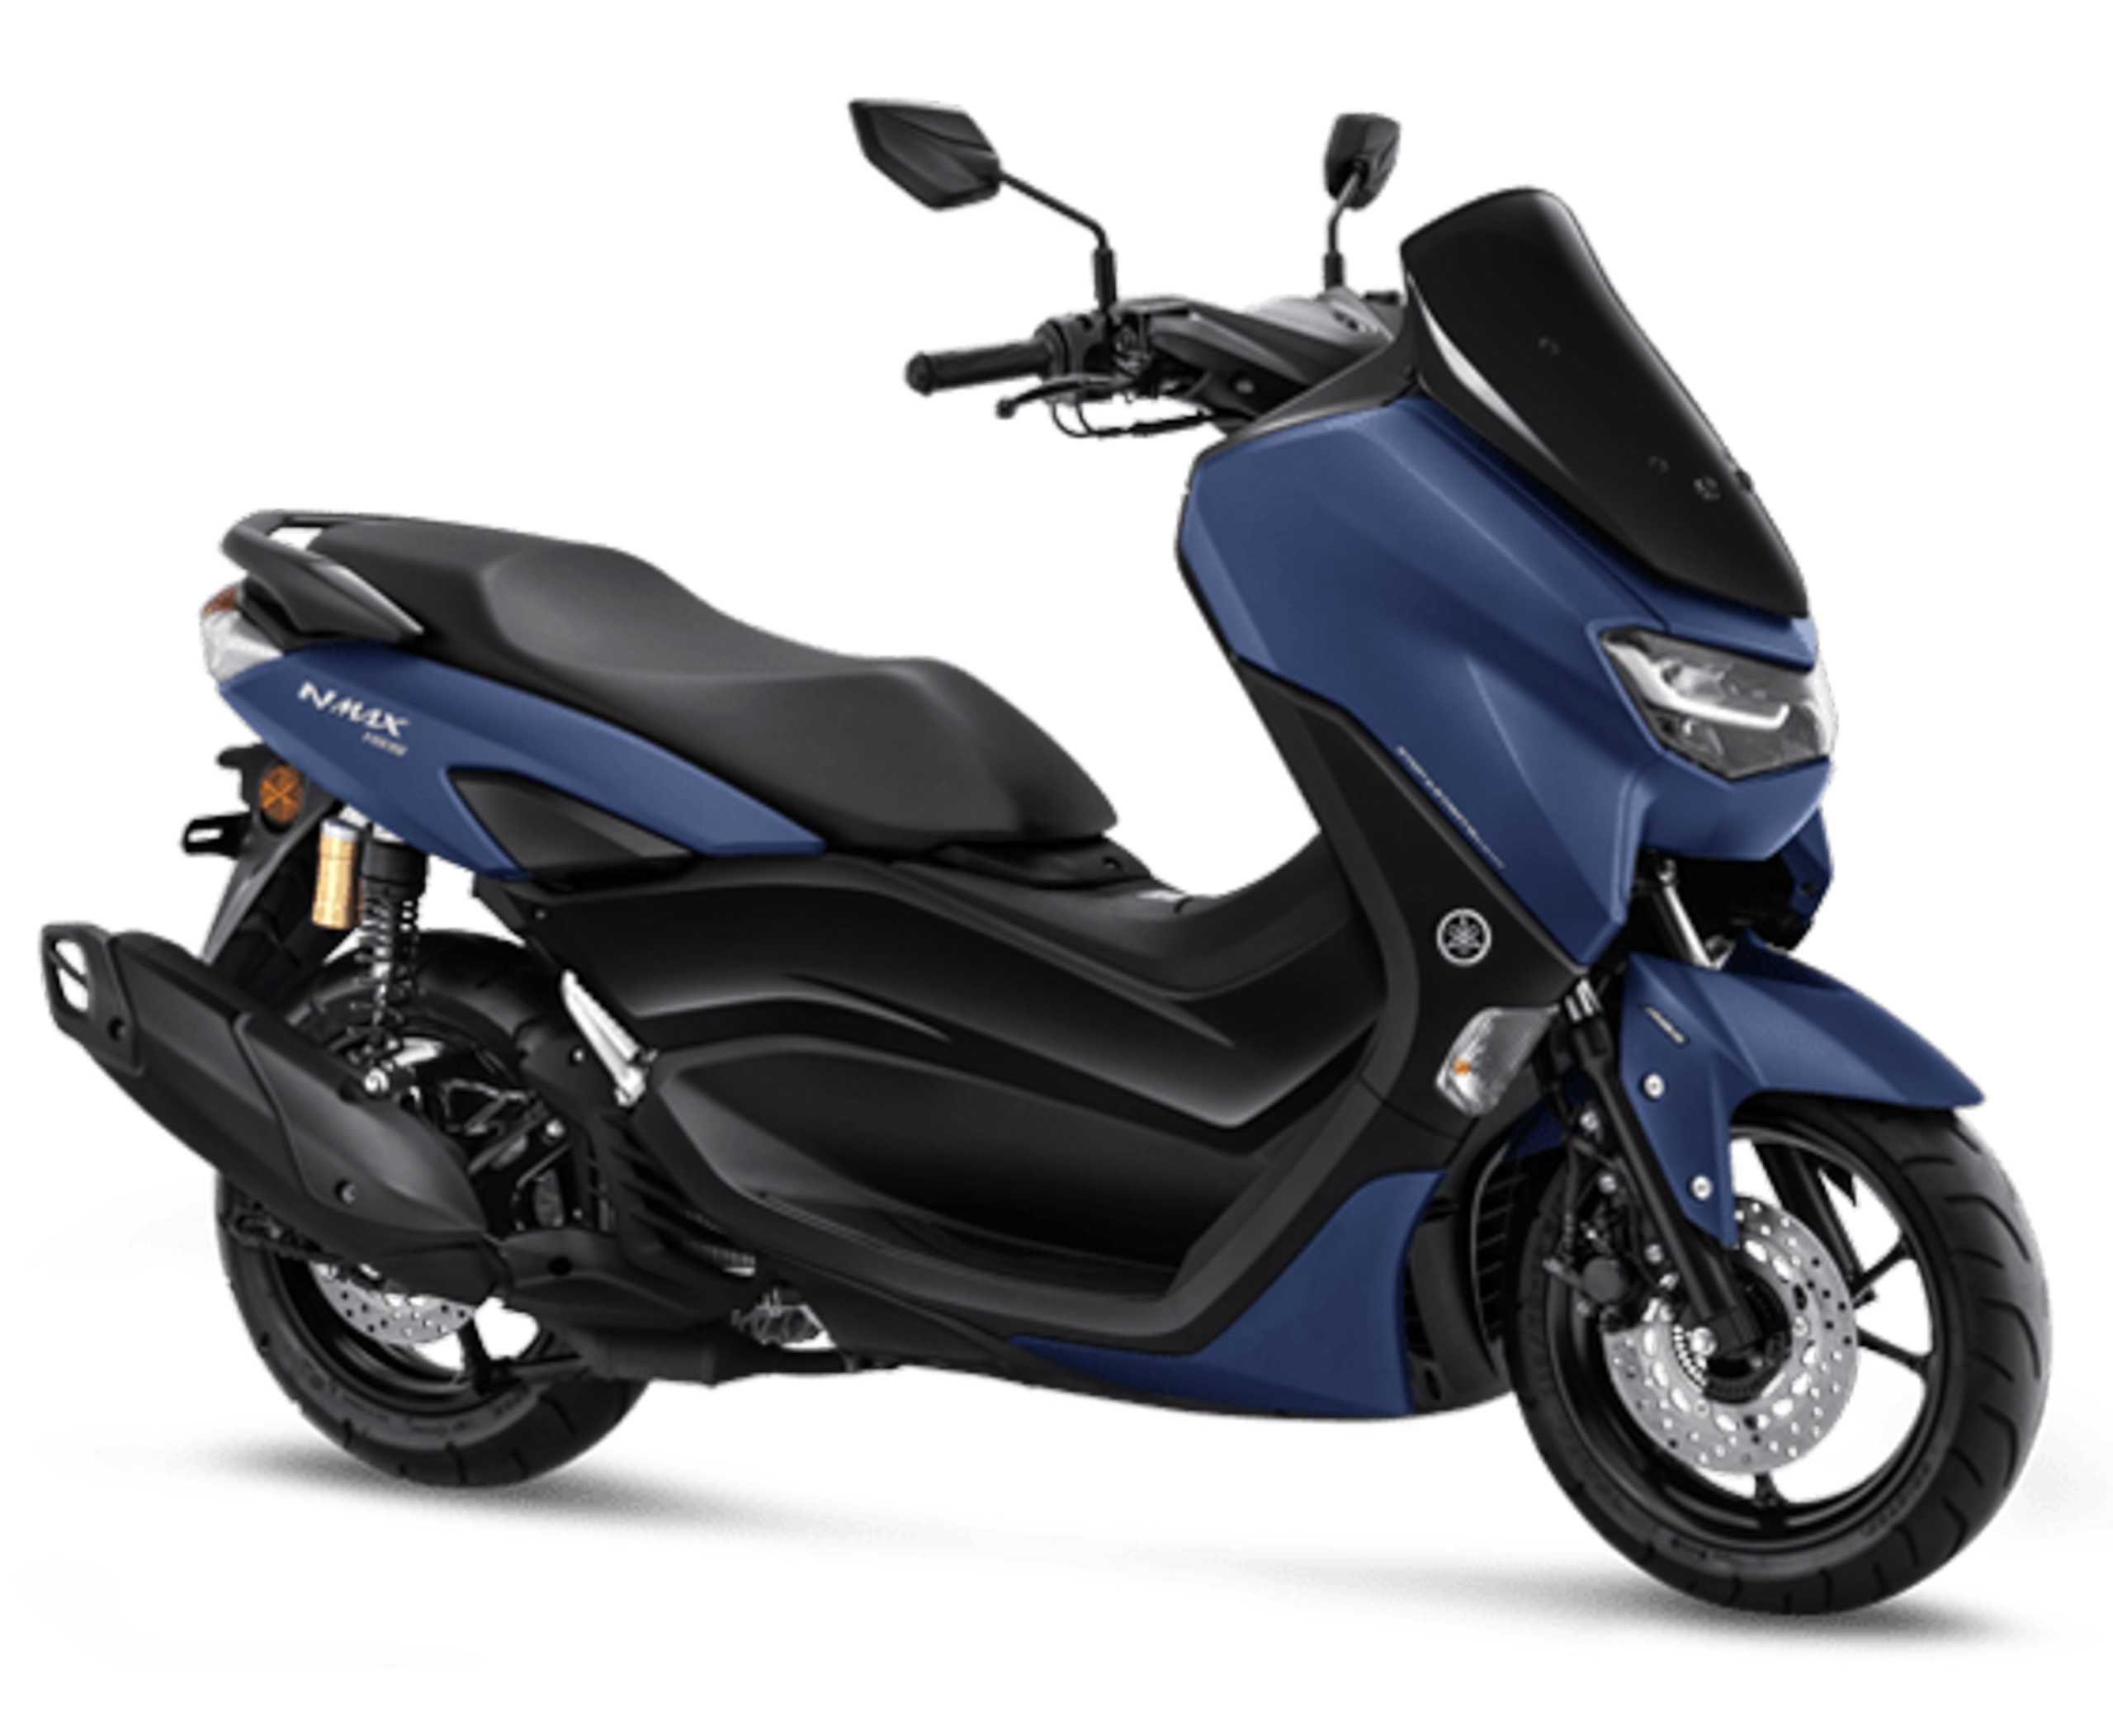 Yamaha Nmax 2020 Dengan Abs Dan Traction Control Dijual Mahal Sikit Daripada Honda Pcx Di Indonesia Paultan 